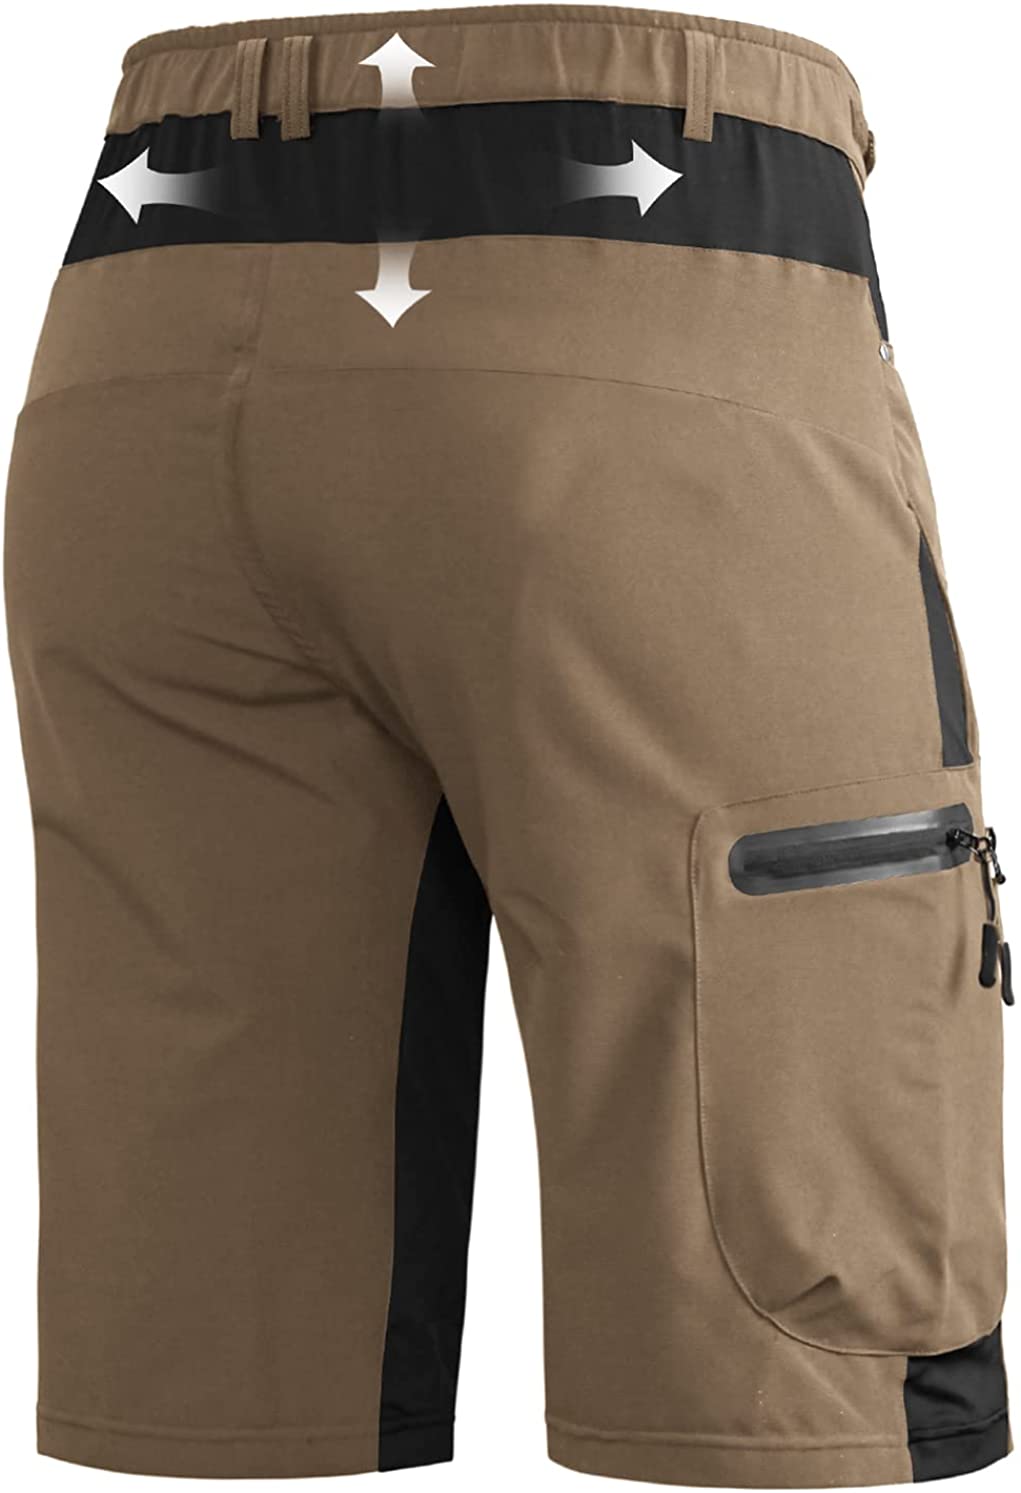 Hiauspor Men's Hiking Cargo Shorts Lightweight Quick Dry Stretch MTB S